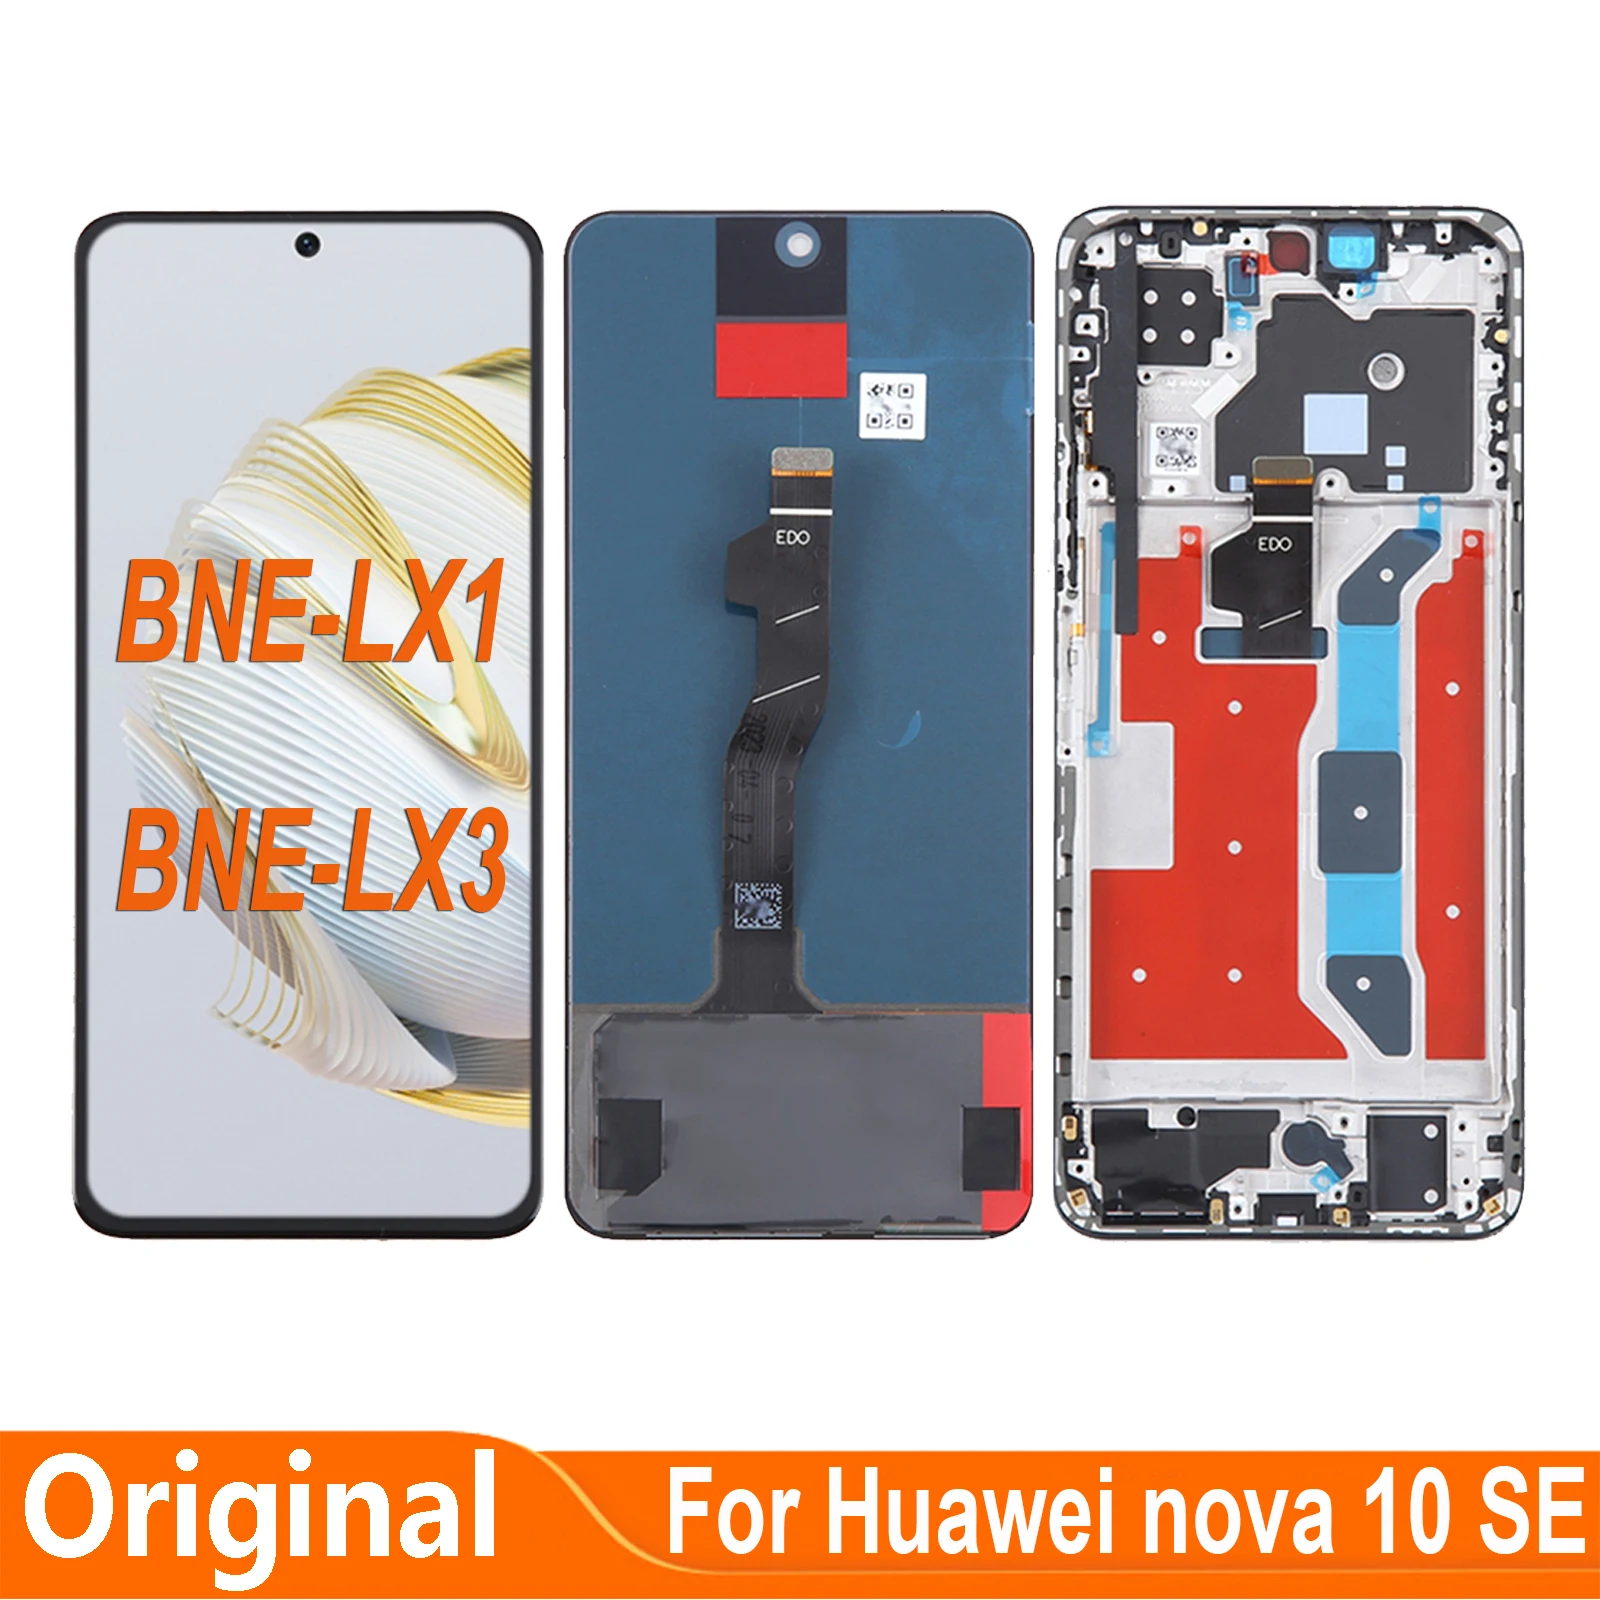 original-pour-huawei-nova-10-se-bne-lx1-bne-lx3-lcd-Ecran-tactile-digitizer-assemblee